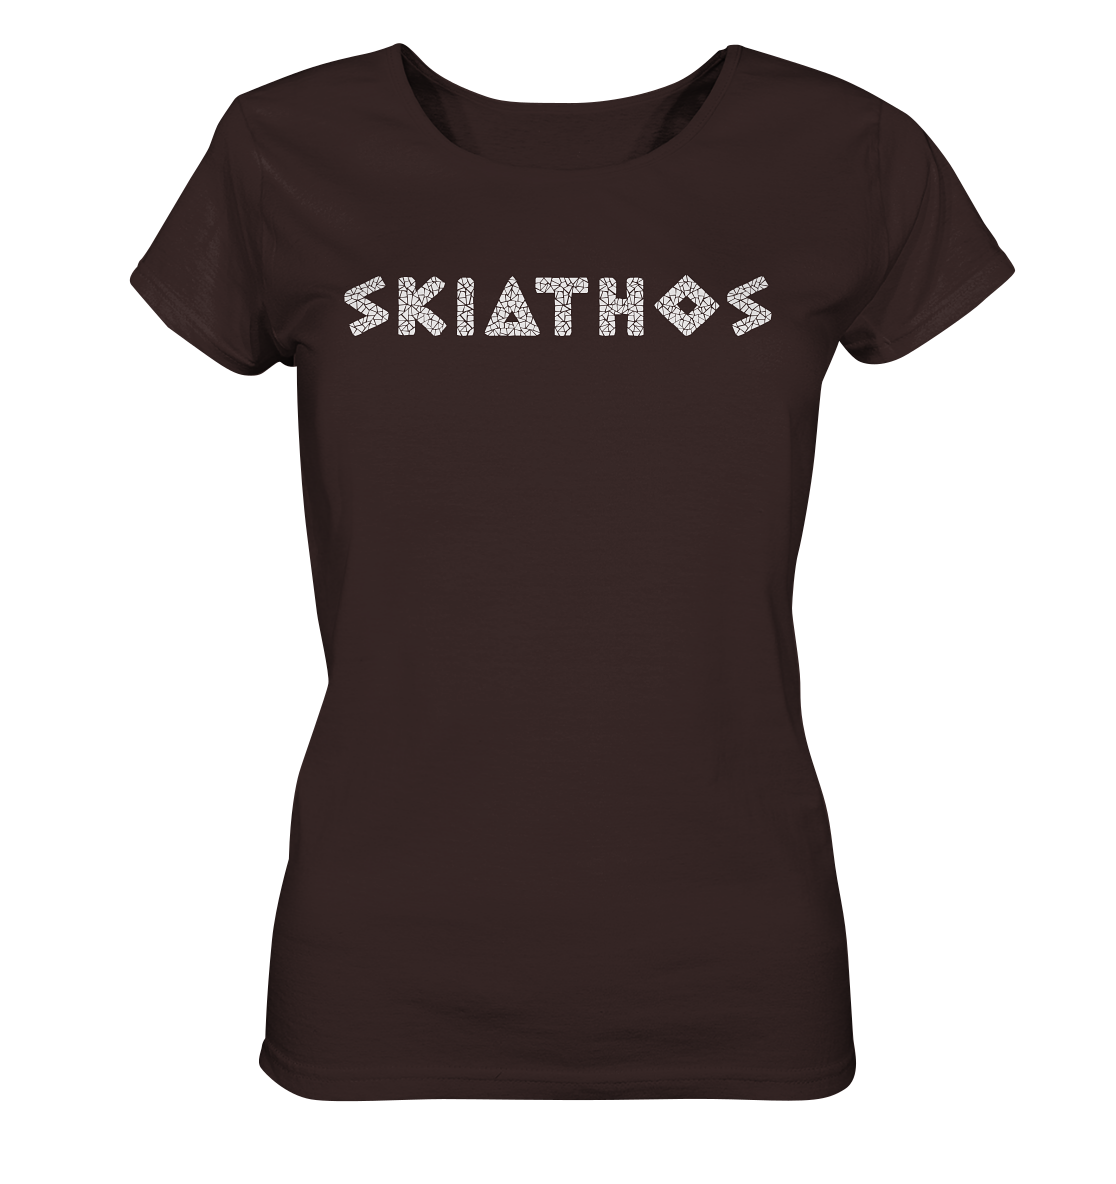 Skiathos Mosaic - Ladies Organic Shirt